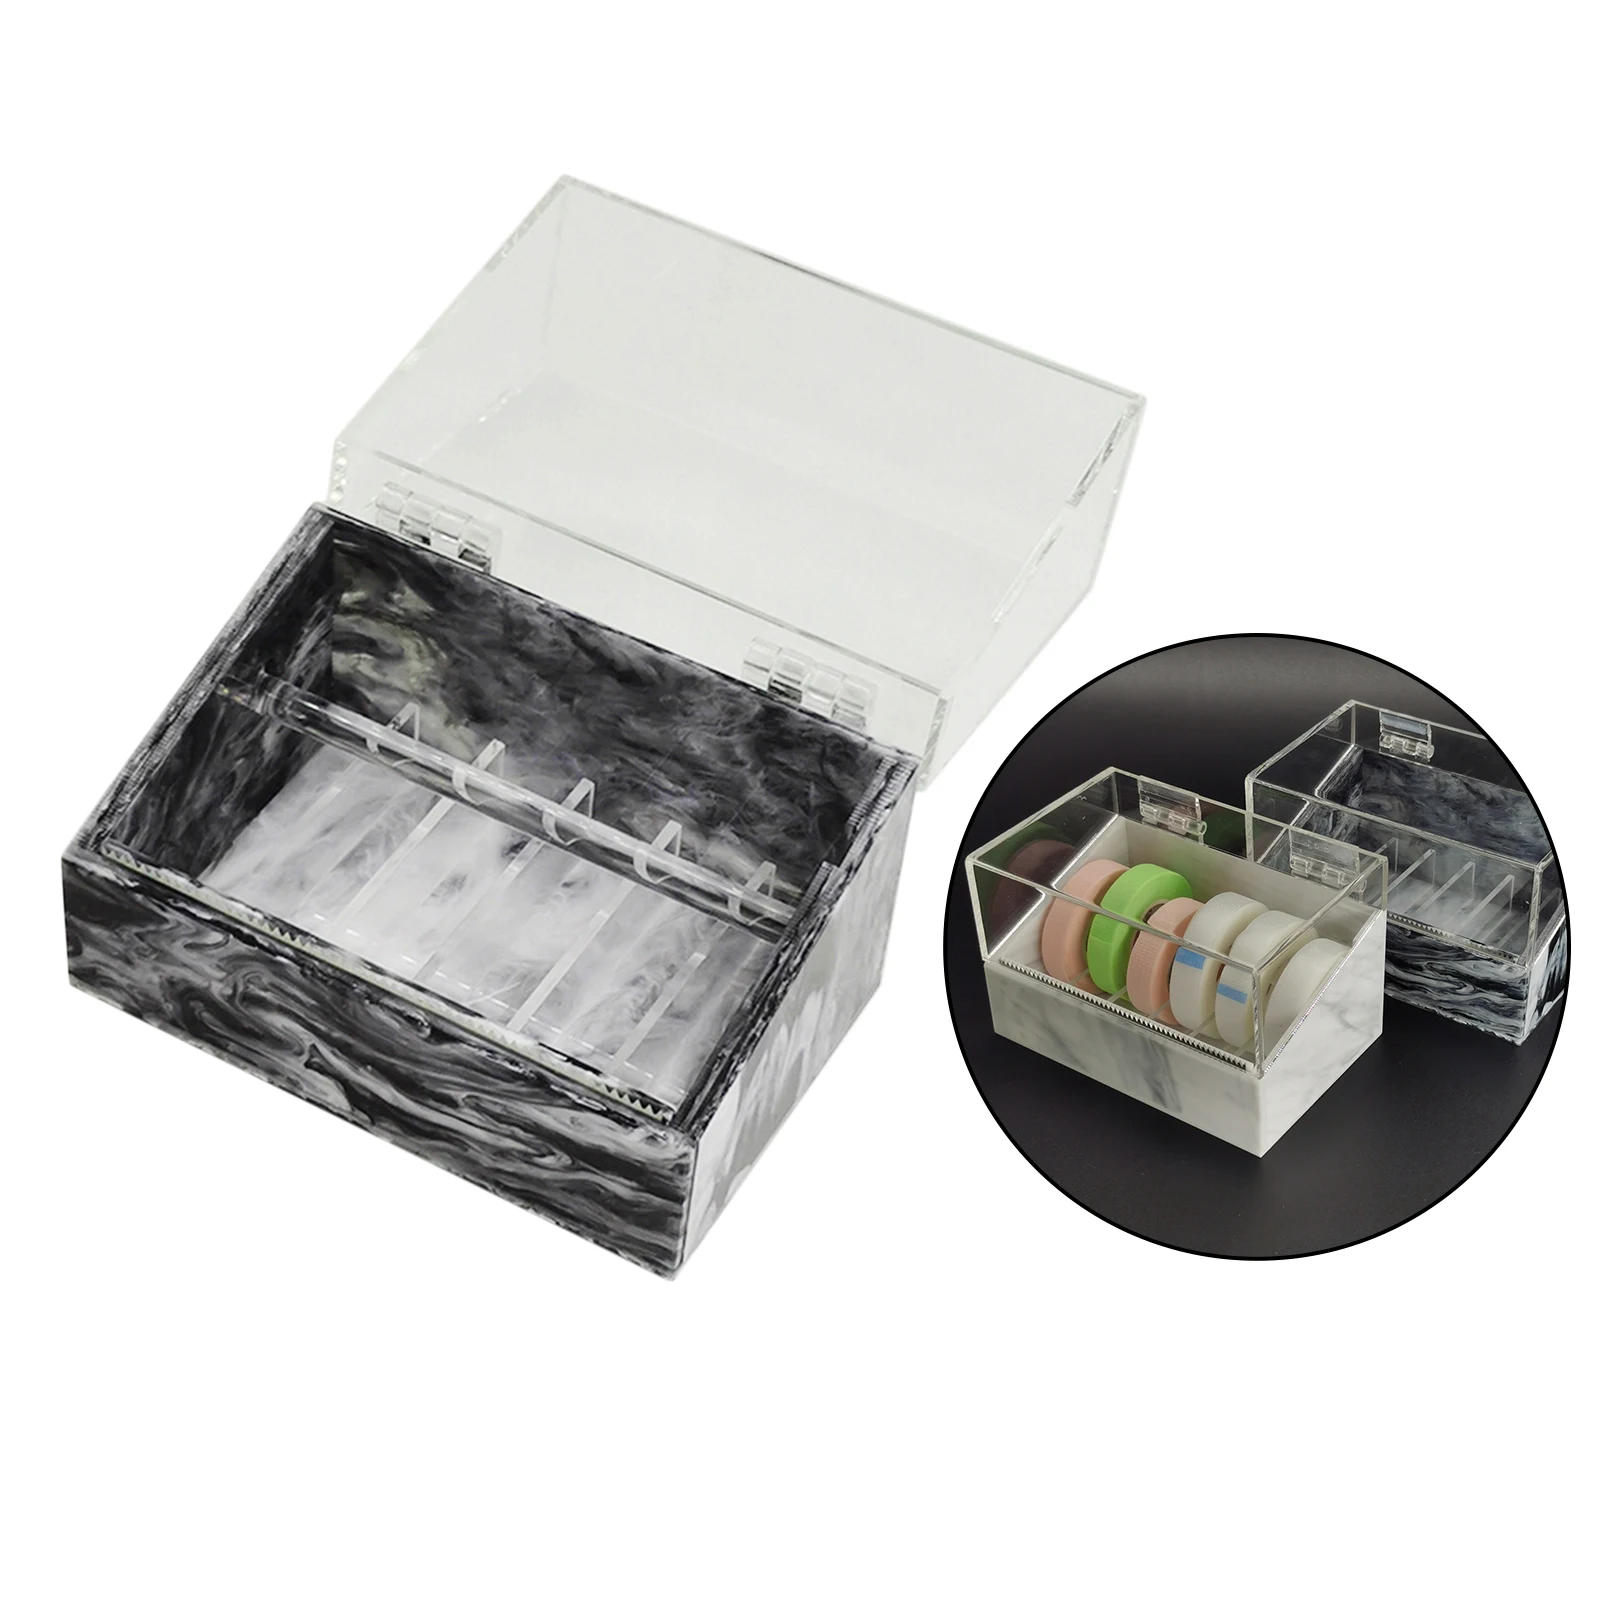 Acrylic Desktop Tape Dispenser, Marble Tape Cutter Core Cute Tape Holder Office Supplies